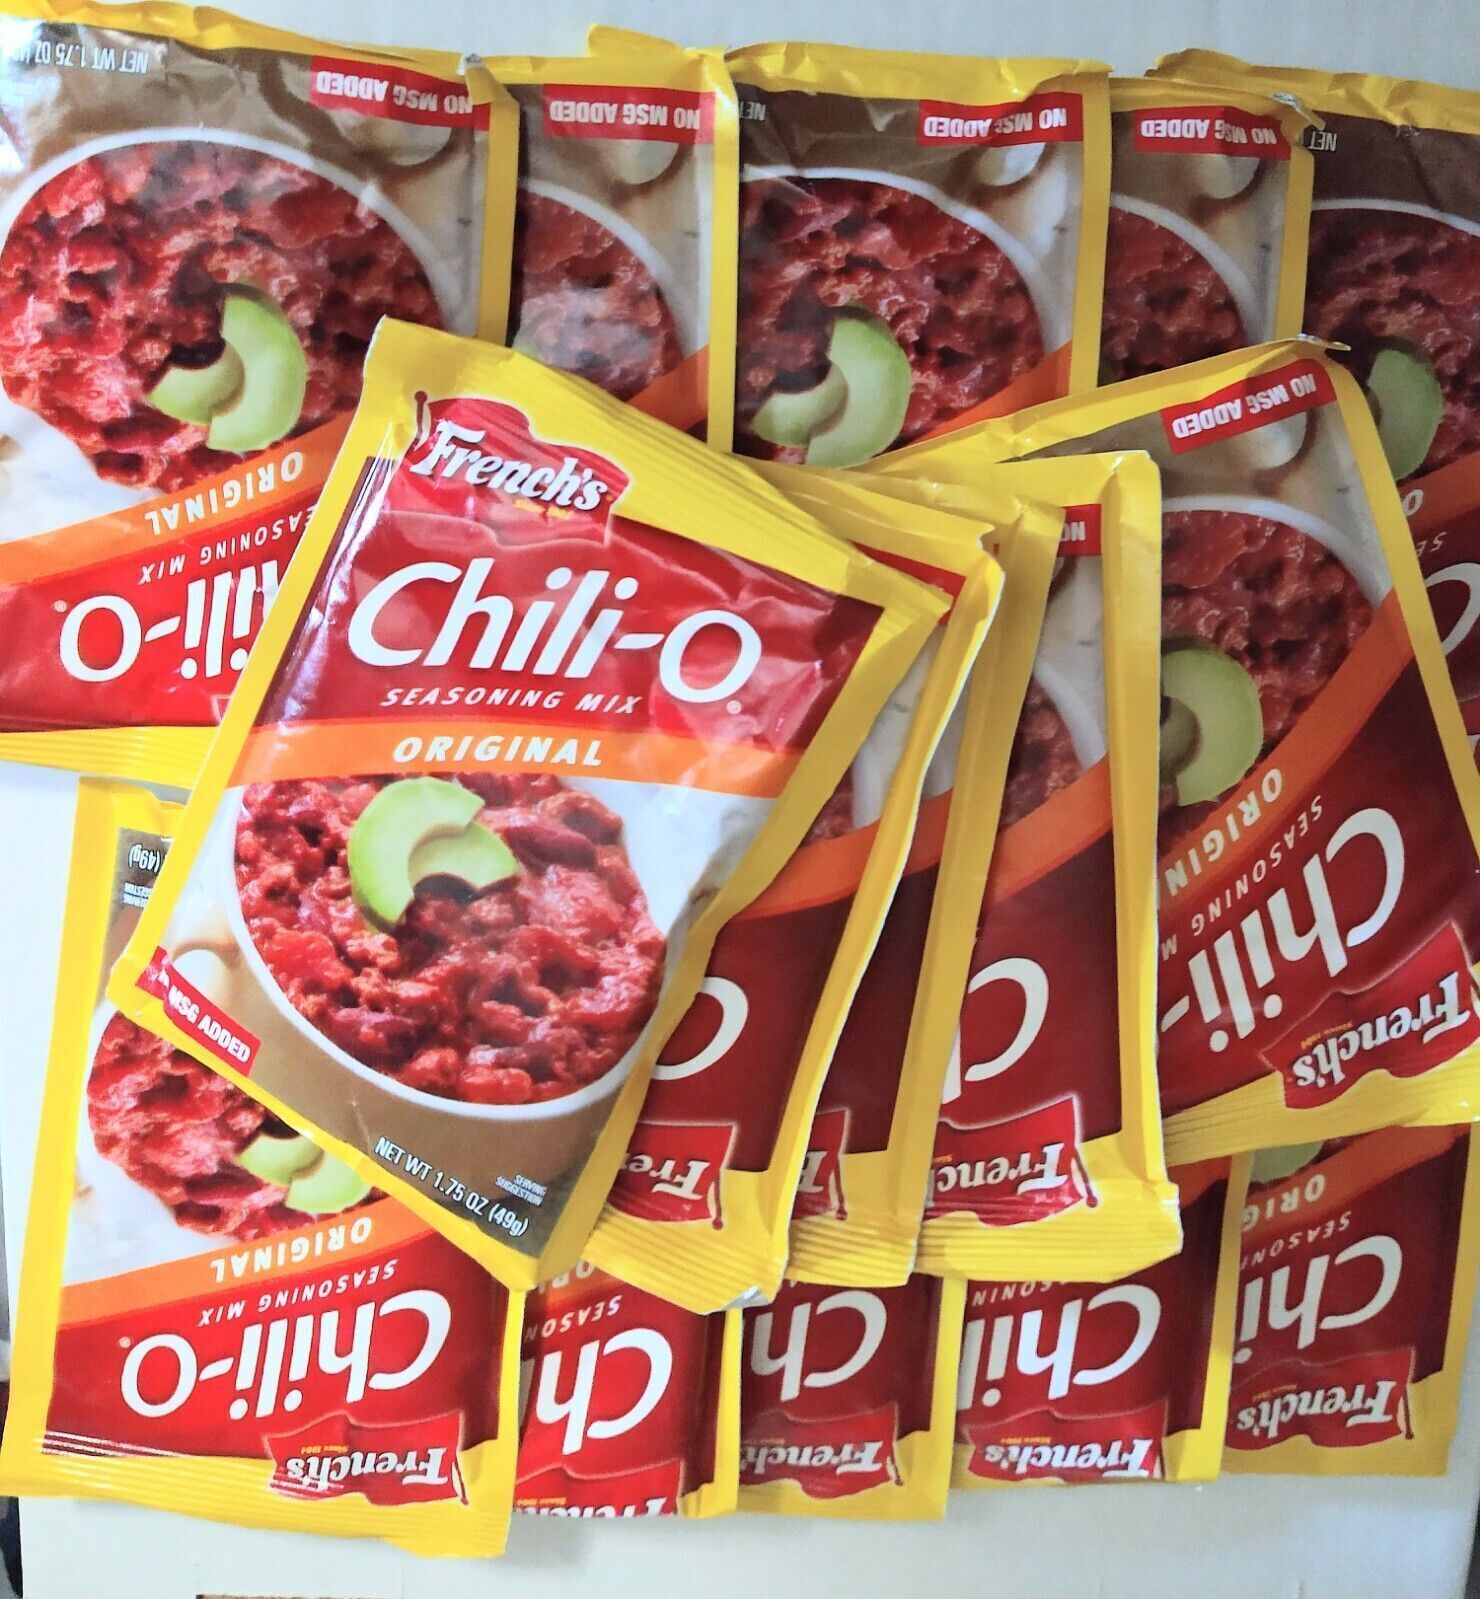 French's Original Chili O Seasoning Mix Chili Spice Chili O with Onion - $2.48 - $24.74